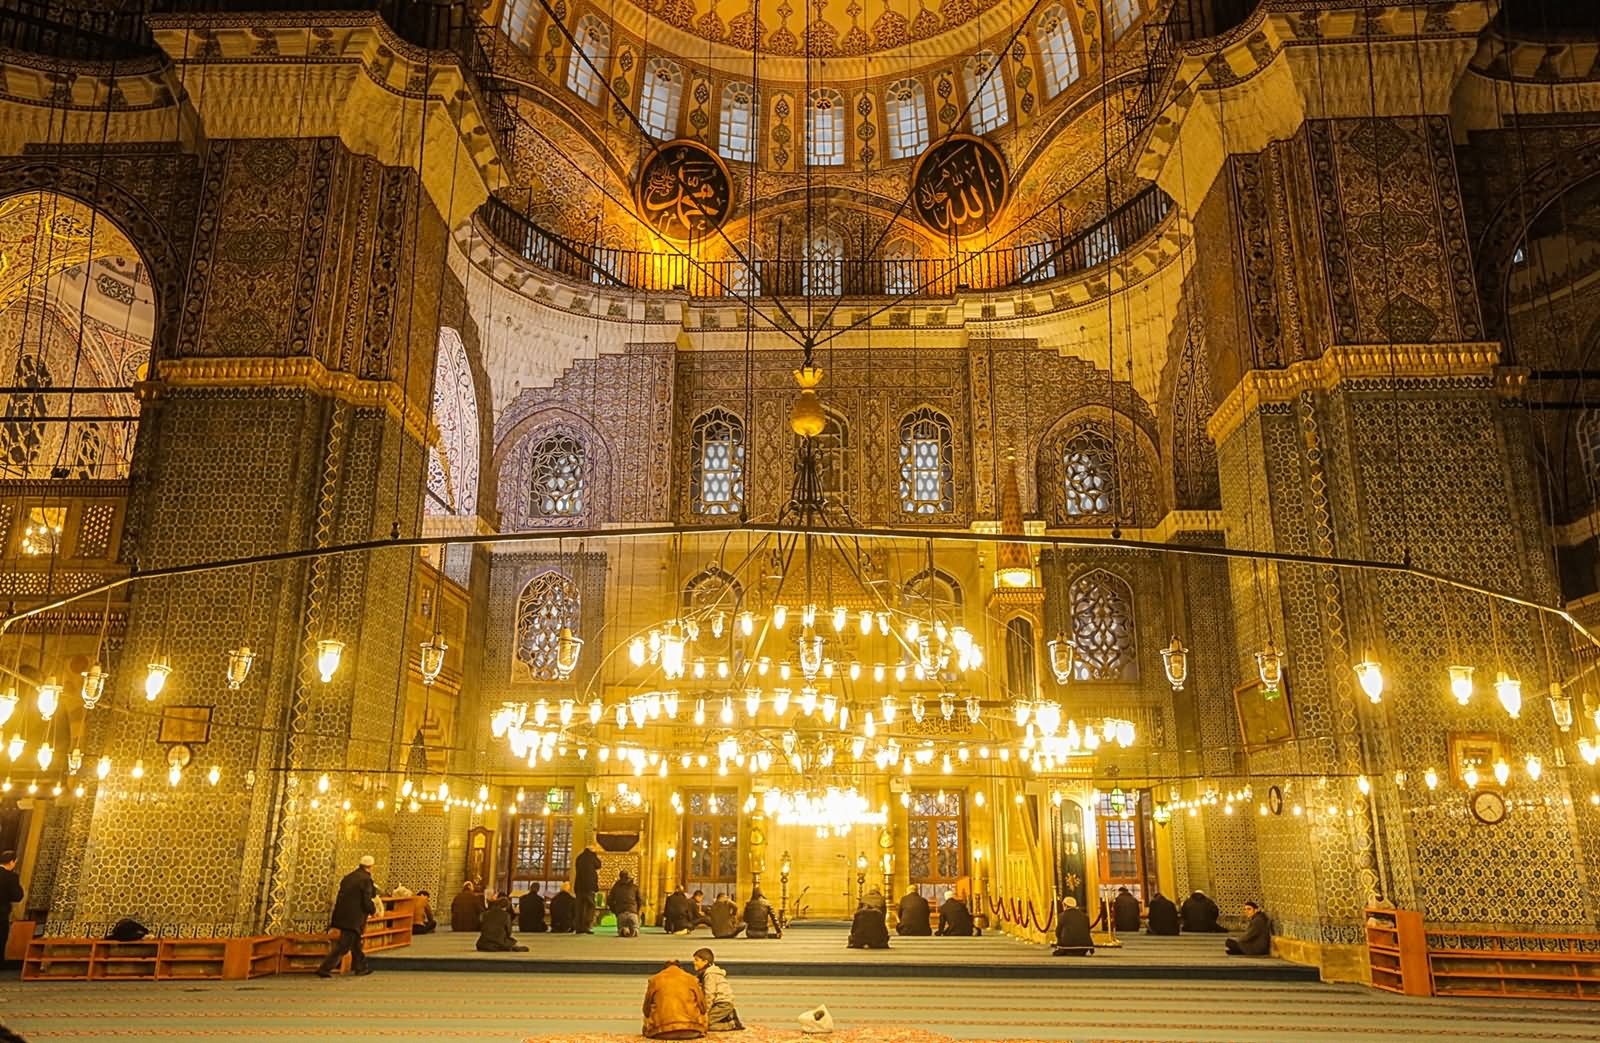 Yeni Cami Mosque In Eminonu, Istanbul